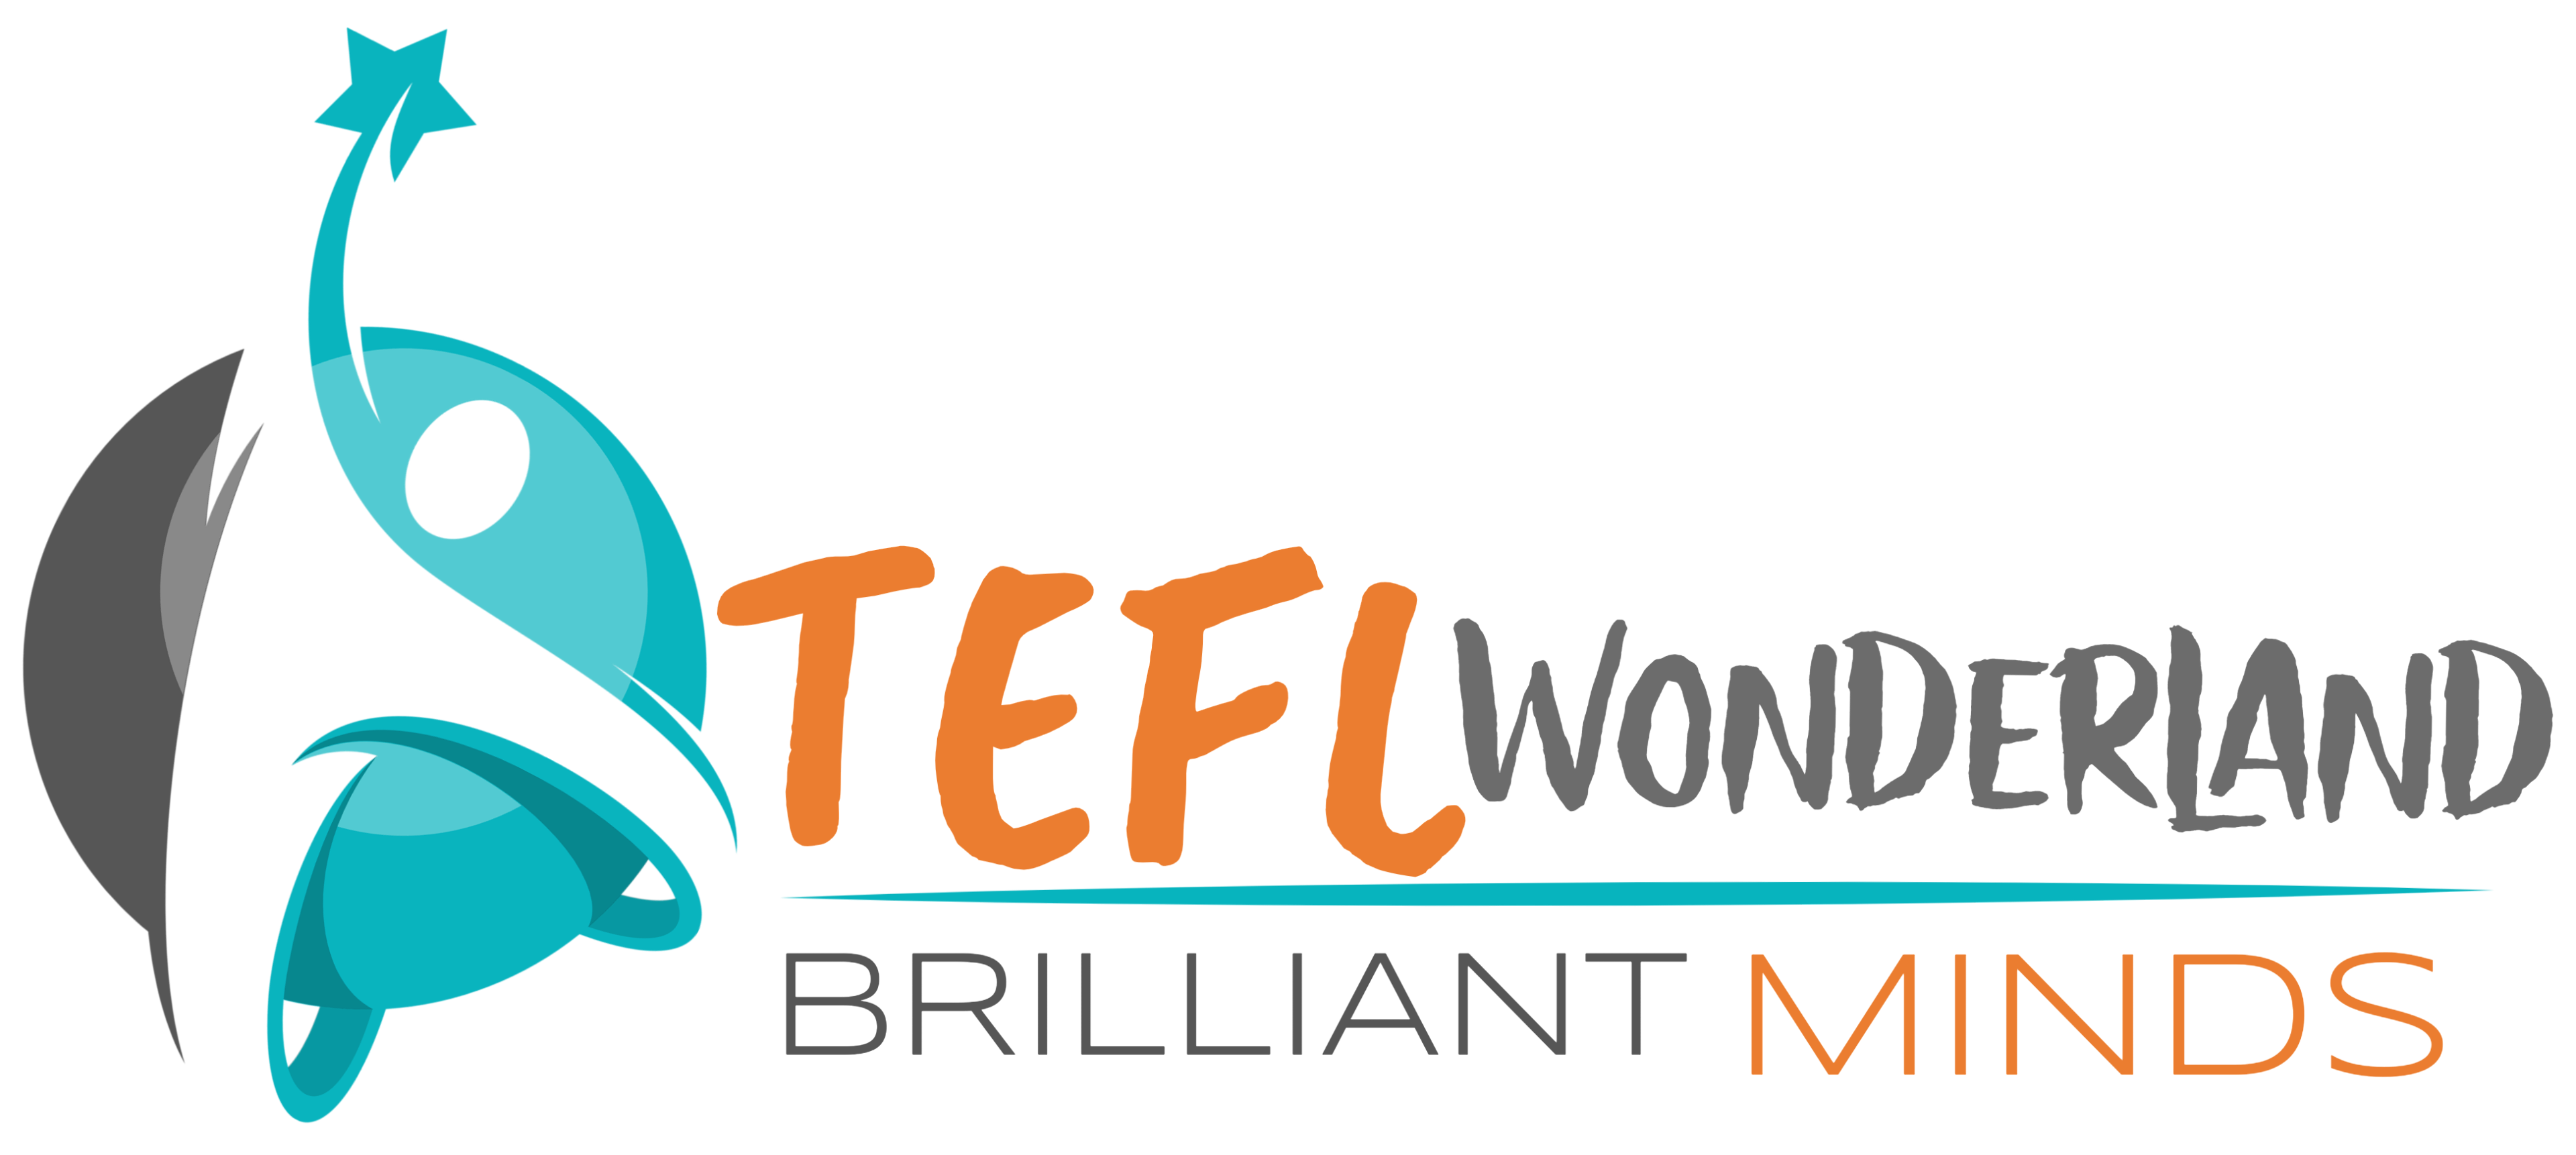 TEFL Wonderland - Brilliant Minds logo